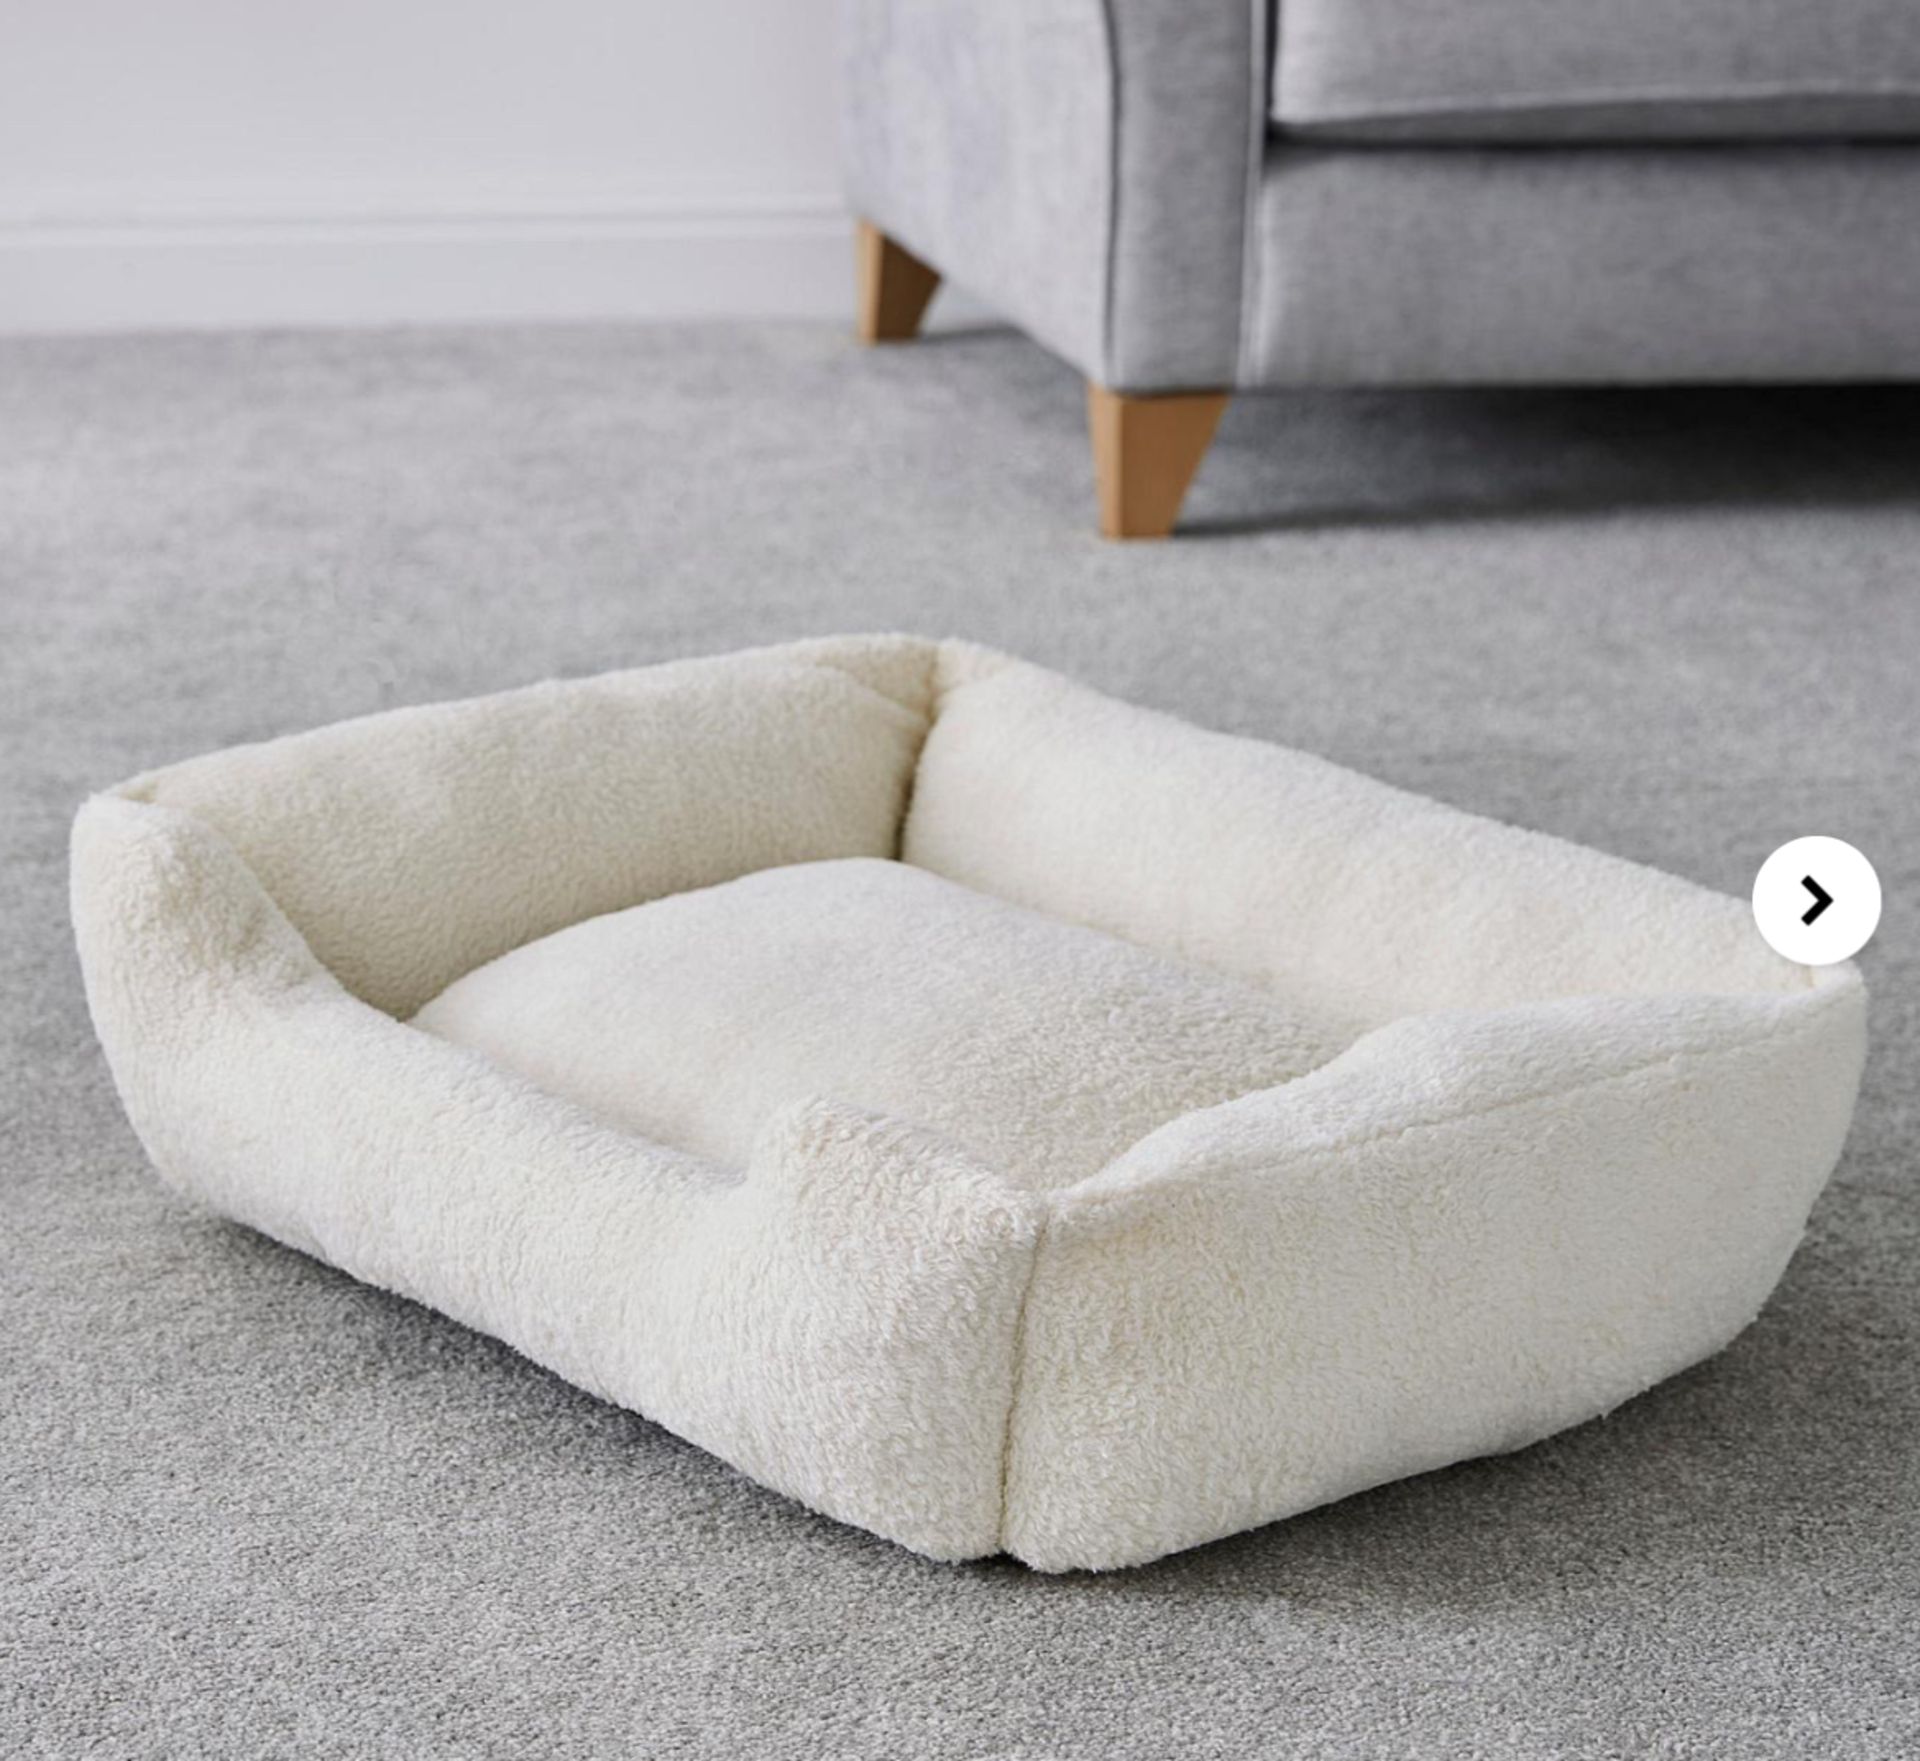 New Cuddle Fleece Luxury Cream Dog Bed - Image 2 of 2